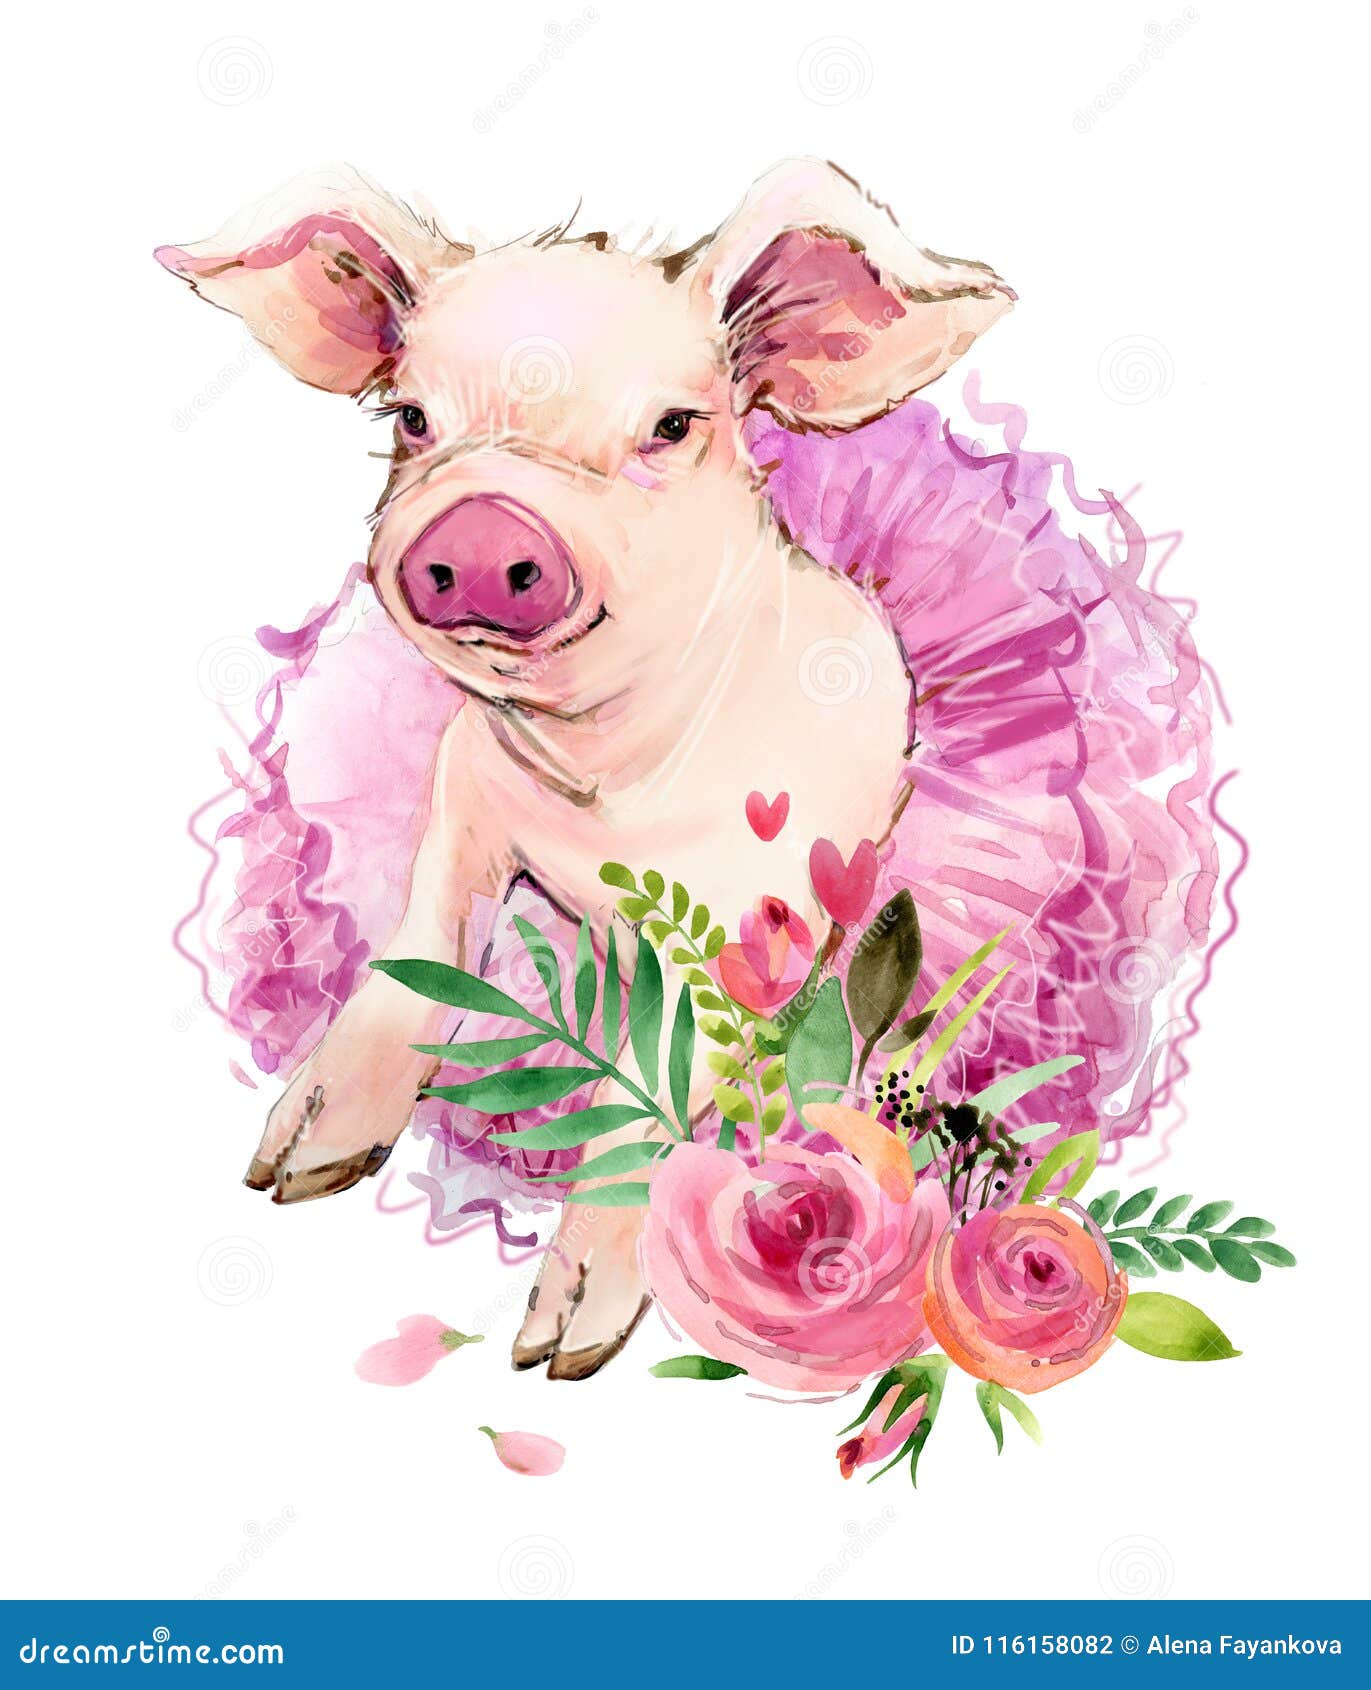 Download Cute Pig Watercolor Illustration Stock Illustration ...